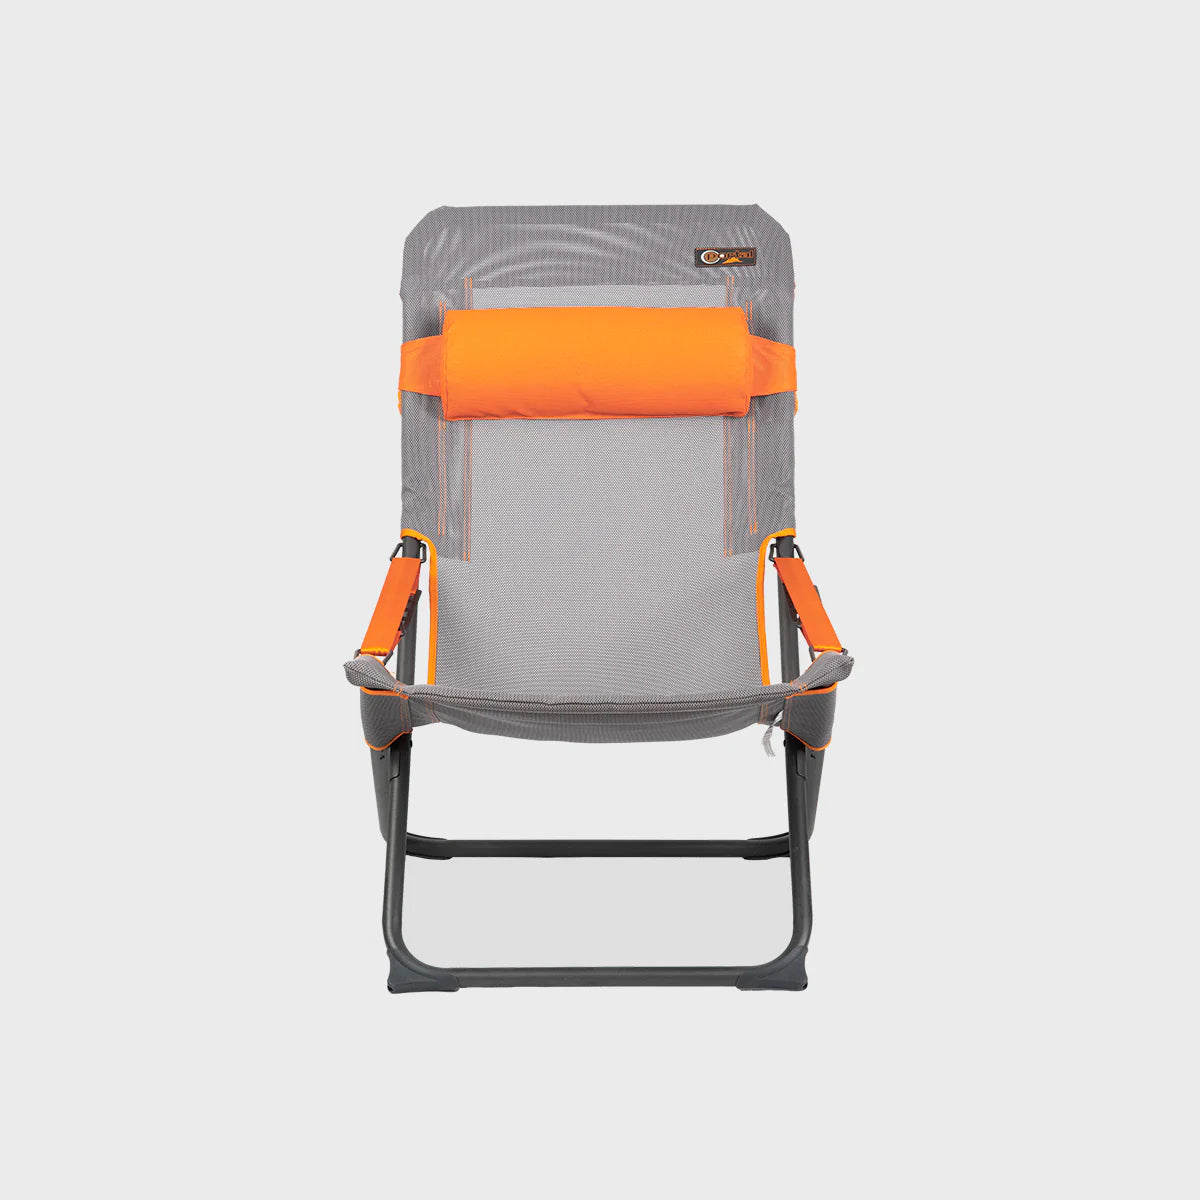 Portal Outdoor - Camping Chair - Eddy